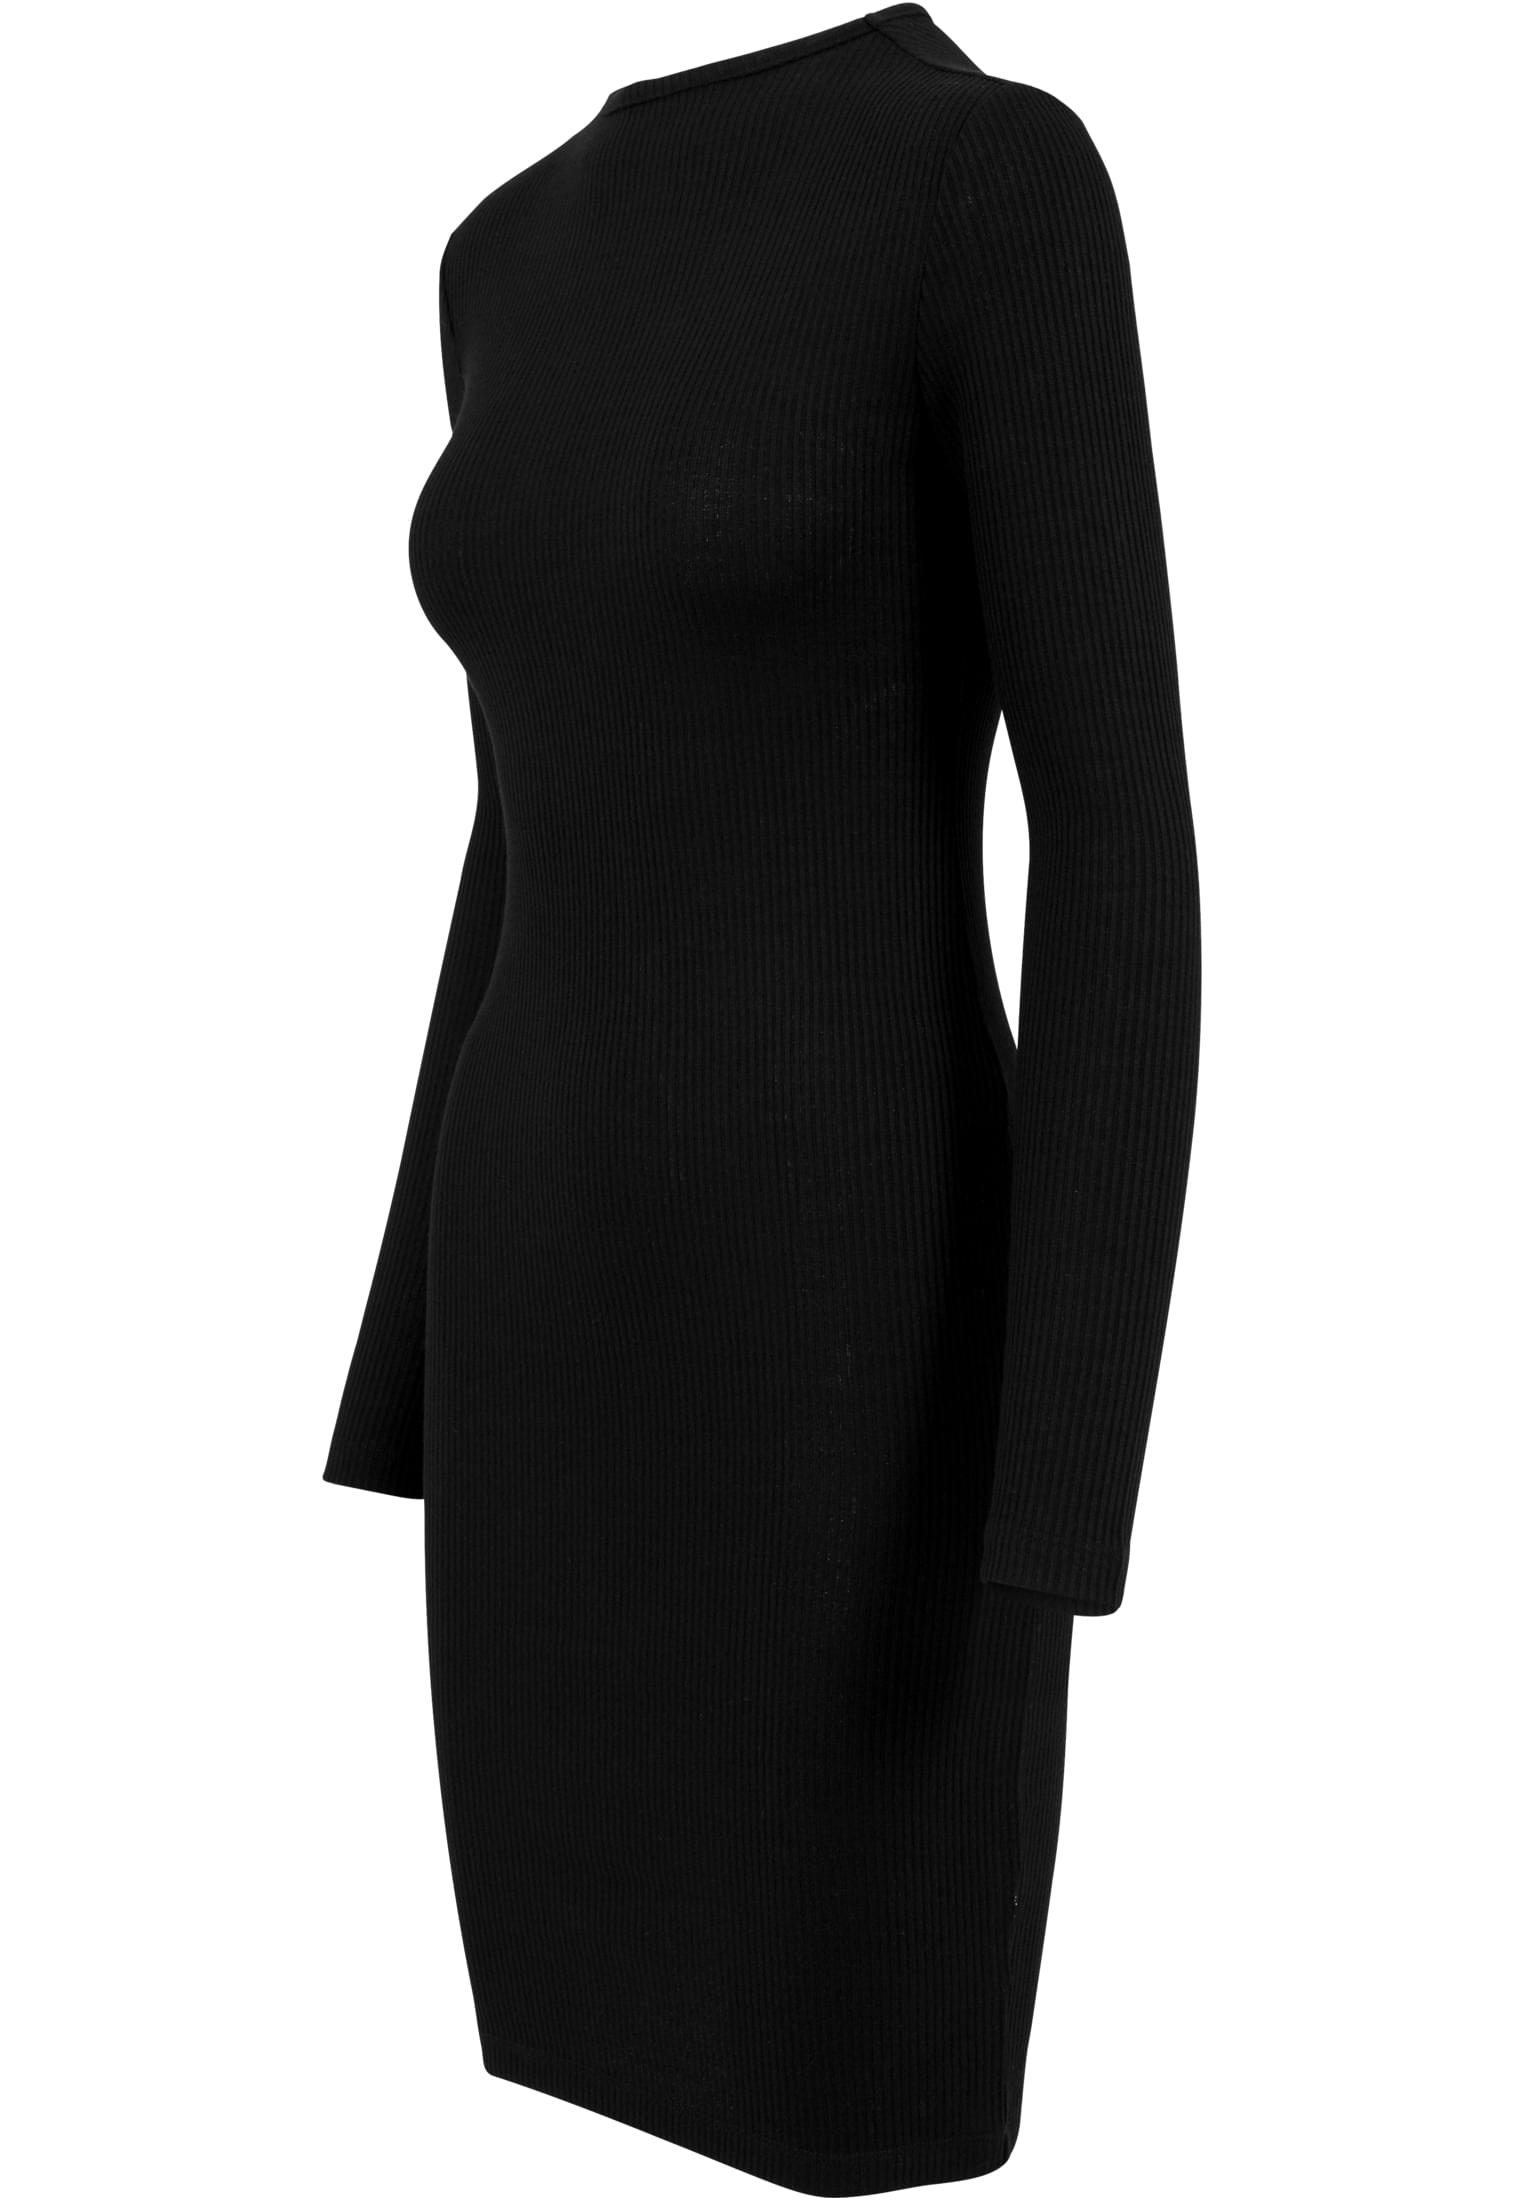 Kleider & R?cke Ladies Rib Dress in Farbe black